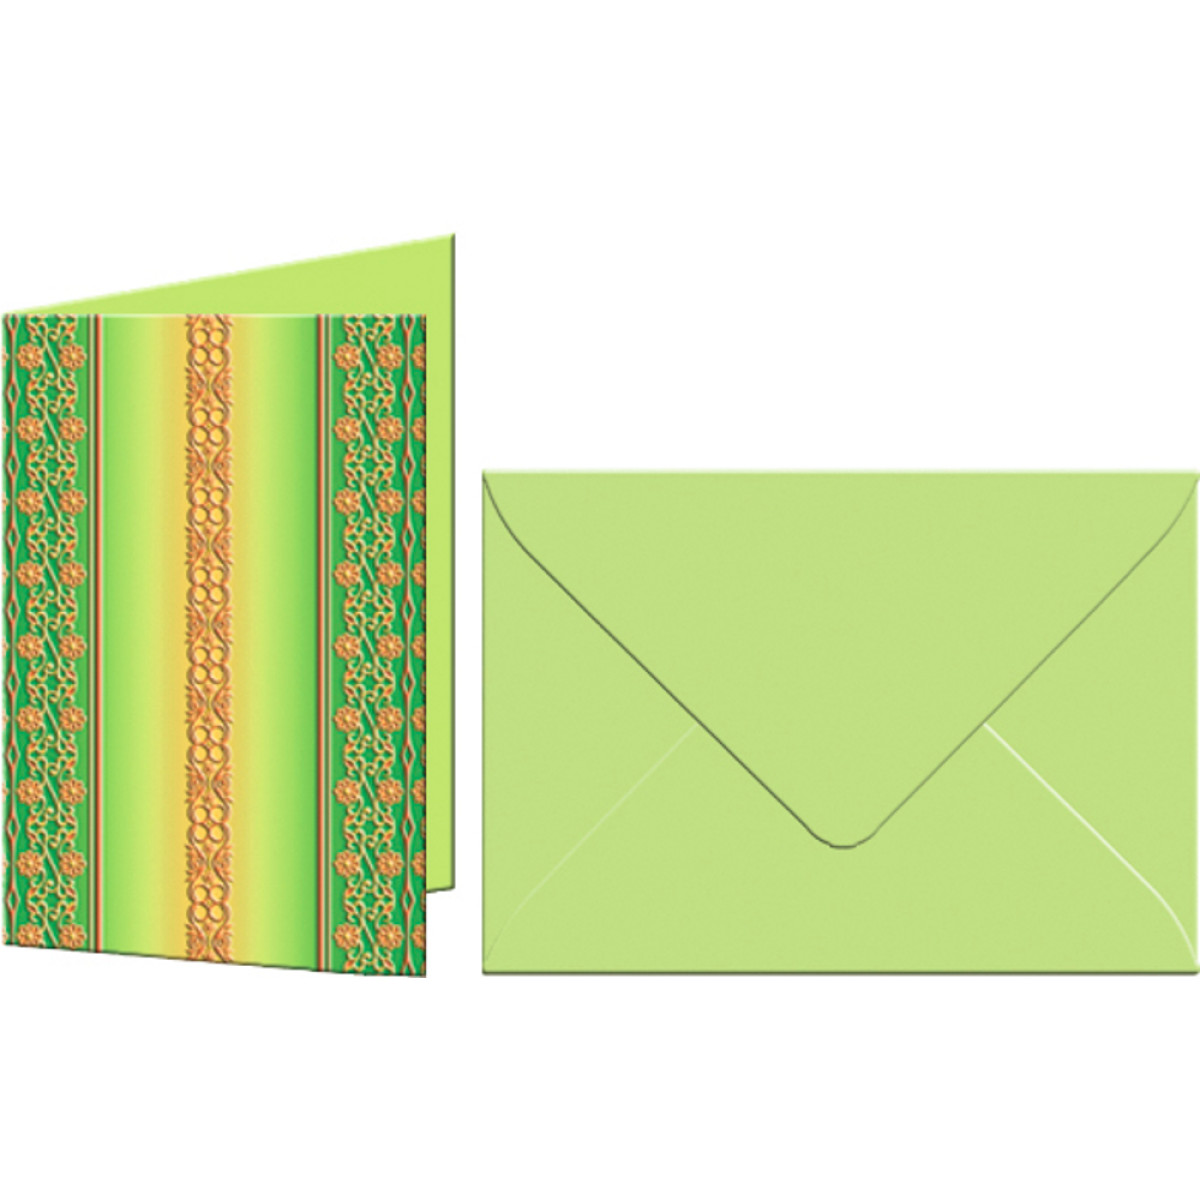 Grußkarten "Bordüren" mit Kuverts 113 x 165 mm grün